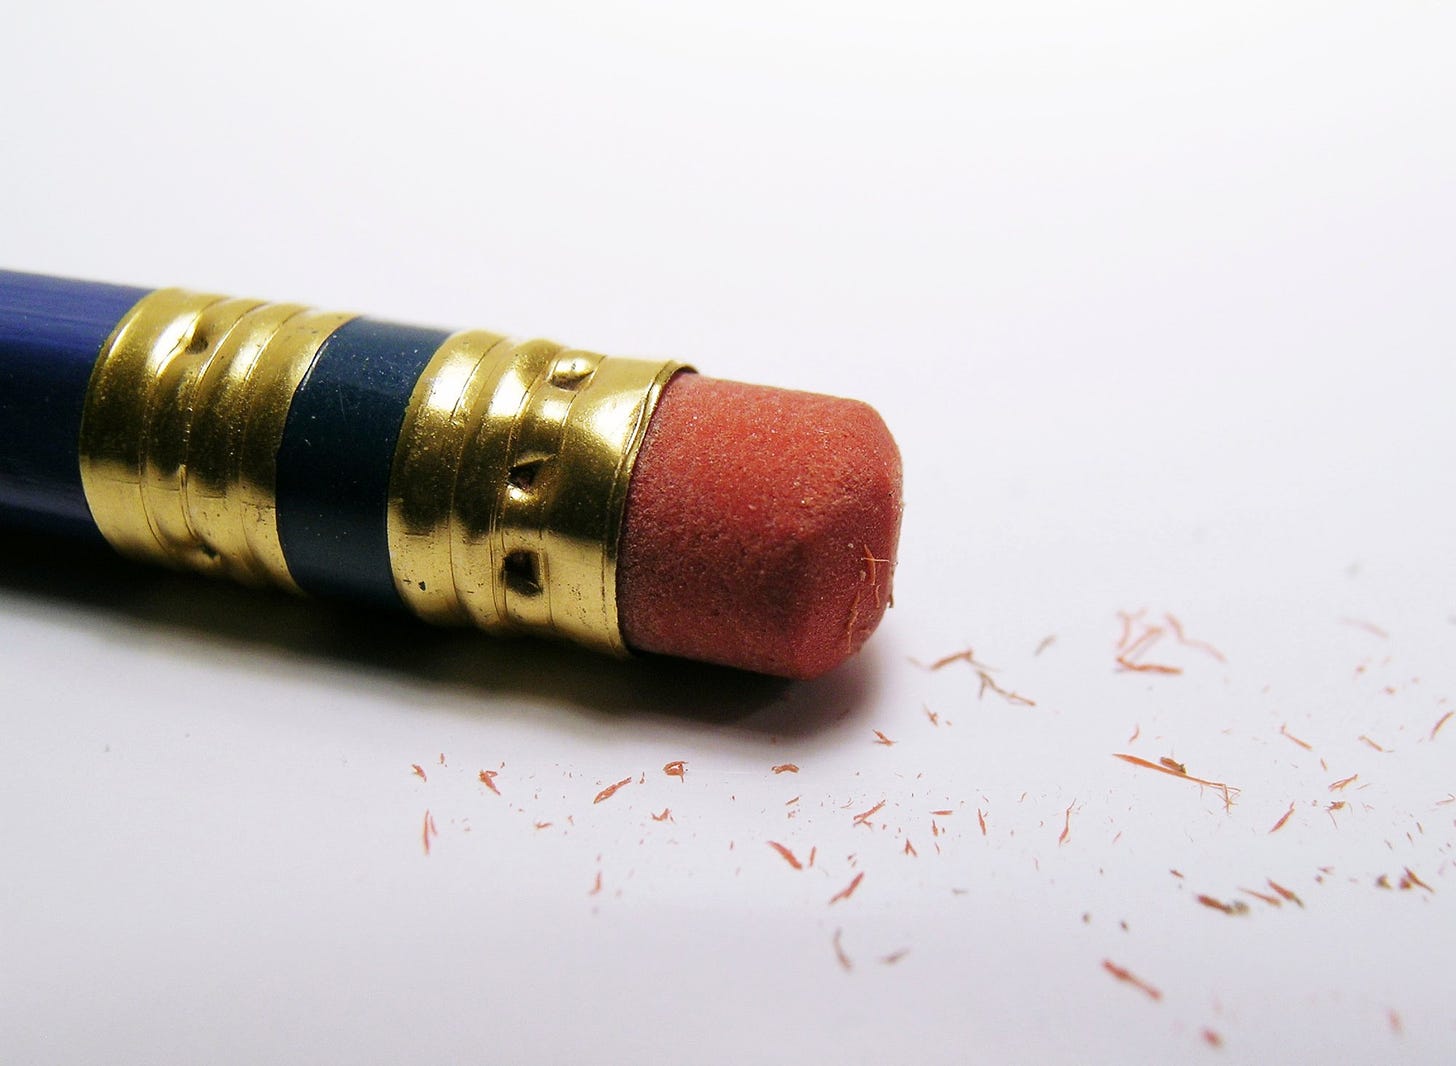 Close-up photo of a pencil eraser.